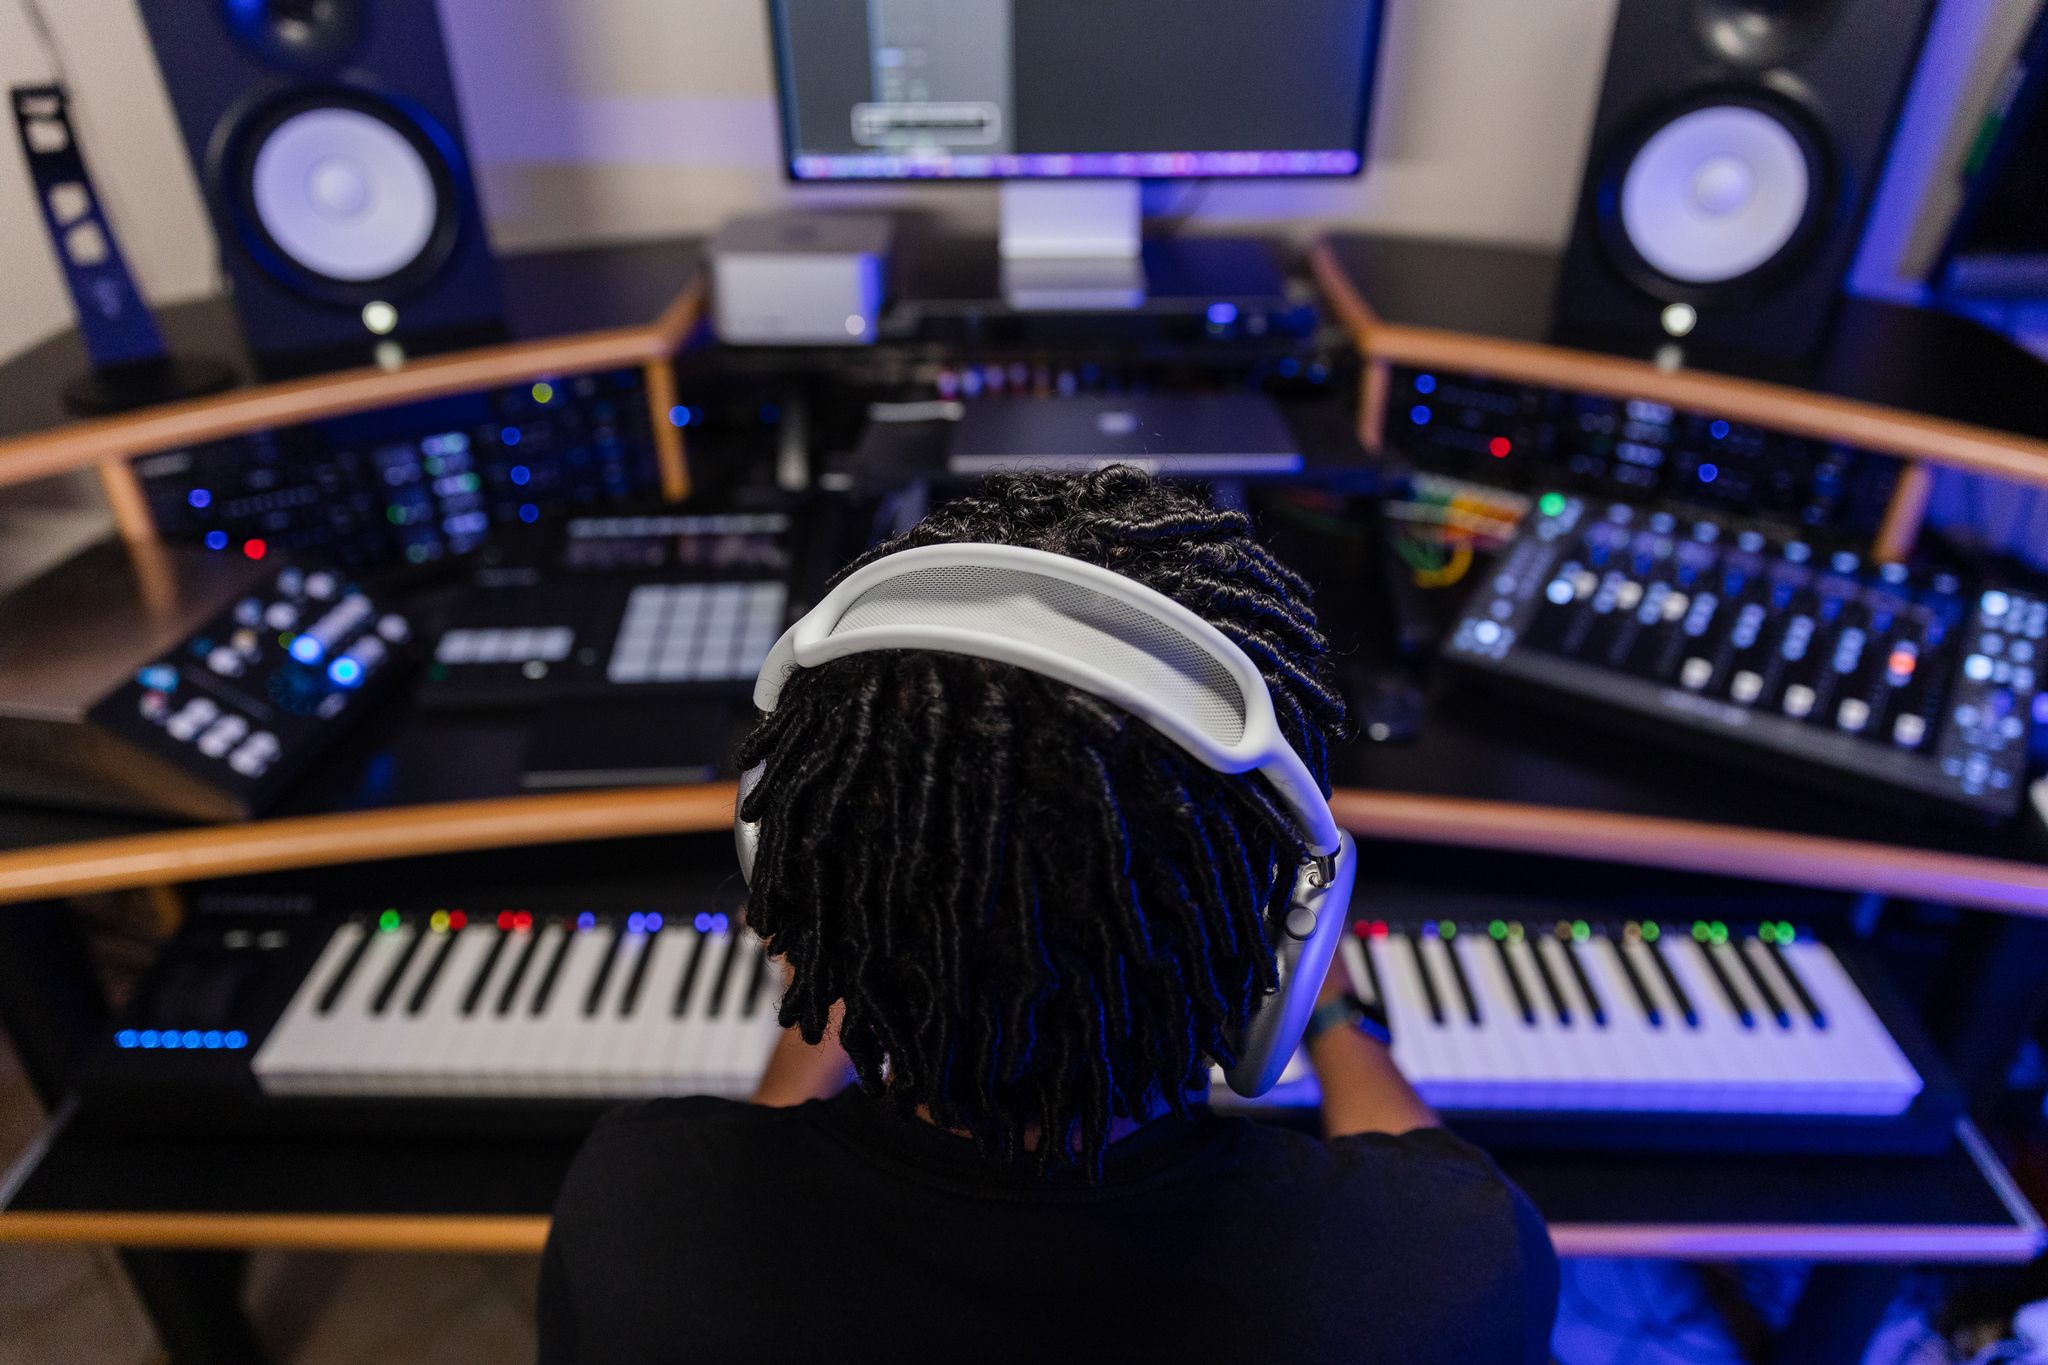 whitaker creating music in his studio